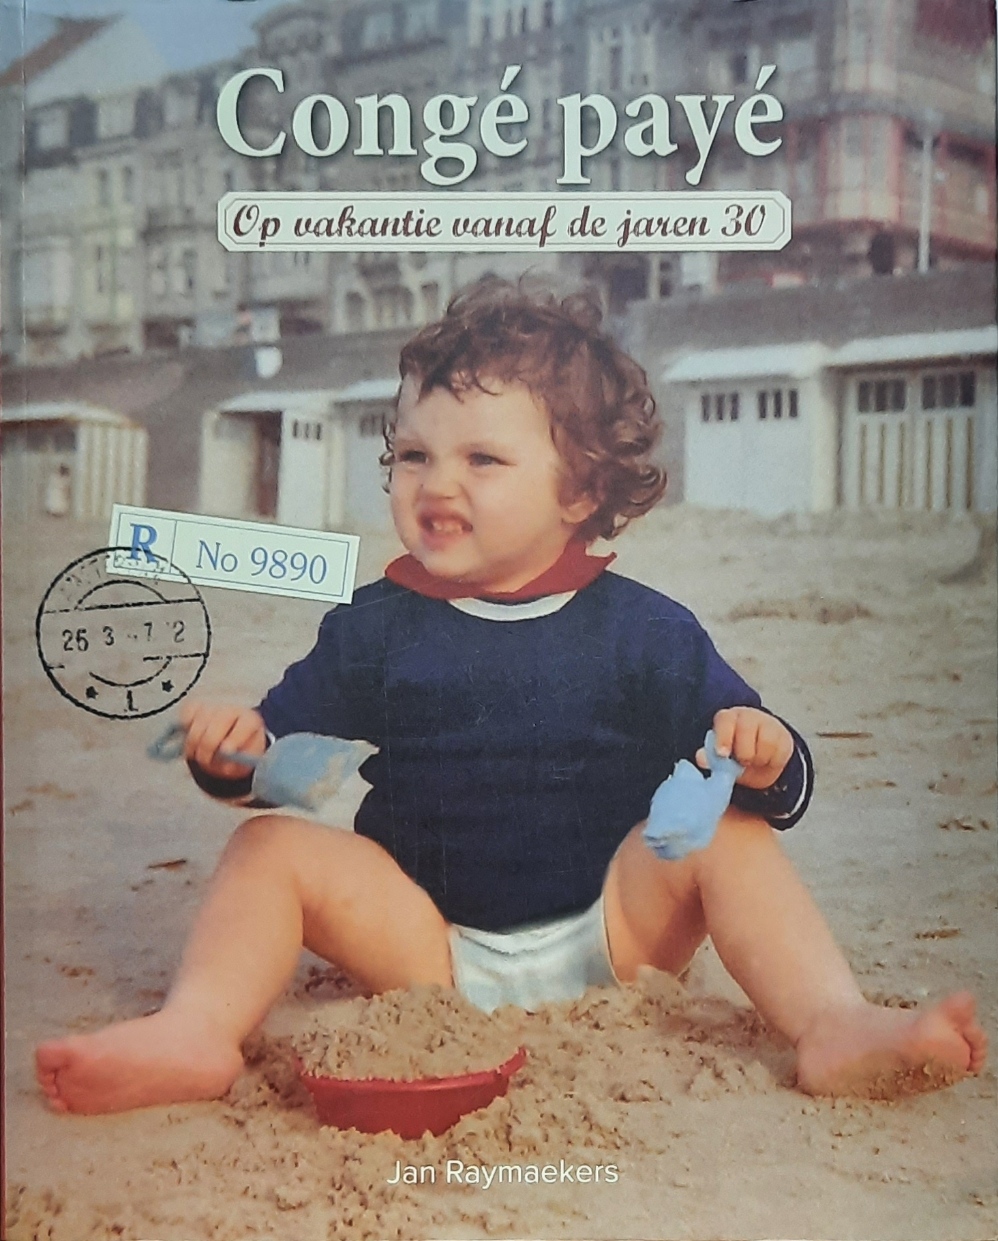 Book cover 202106230337: RAYMAEKERS Jan | Congé payé. Op vakantie vanaf de jaren 30.